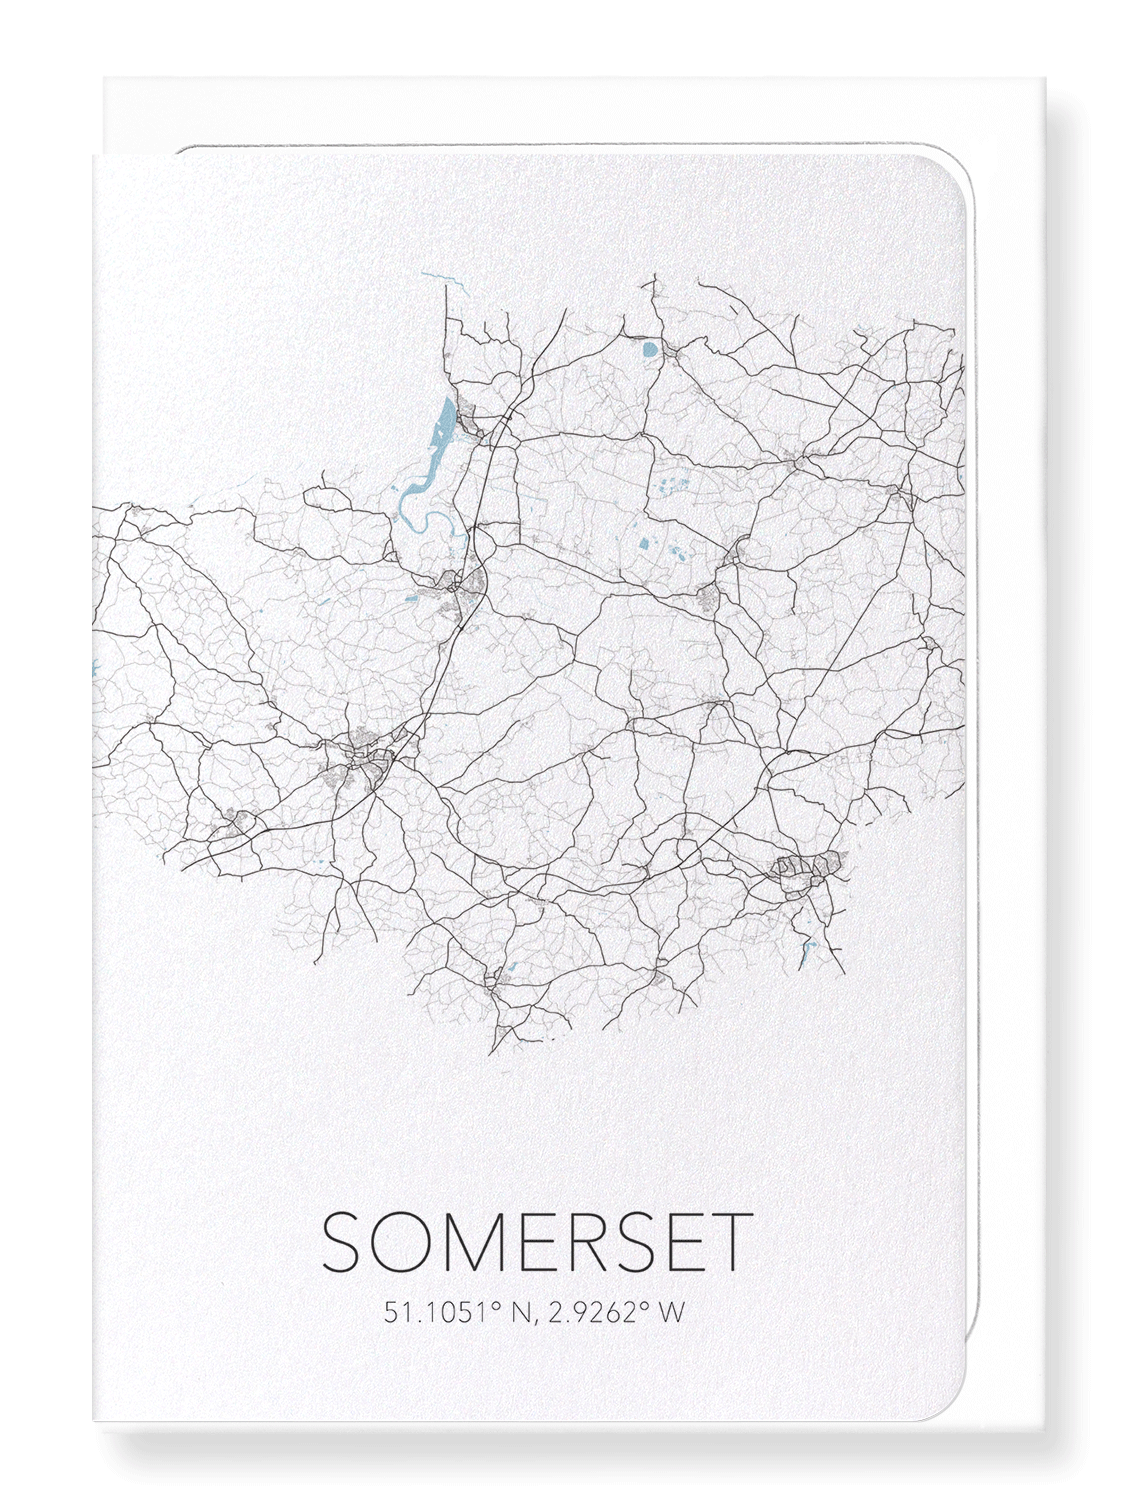 SOMERSET CUTOUT: Map Cutout Greeting Card